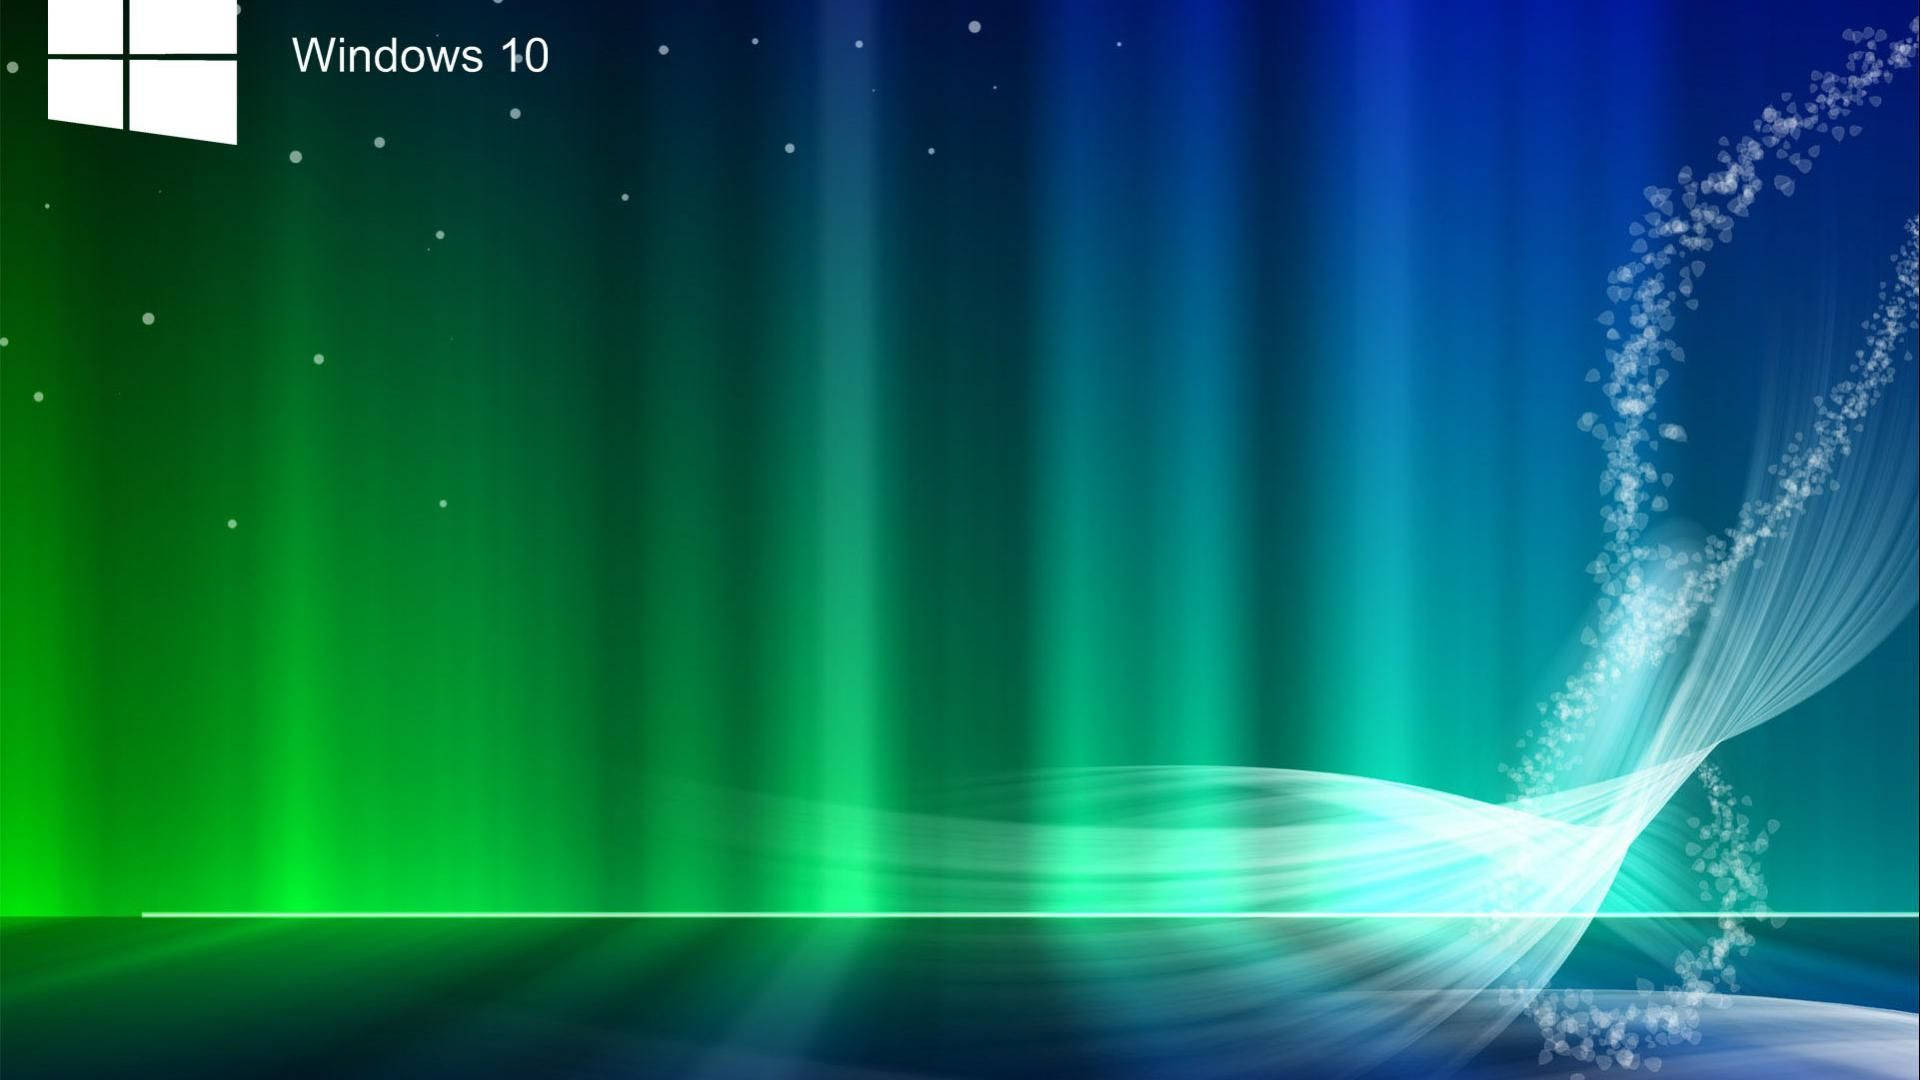 Windows 10 HD Aurora Sky Baggrund: Se denne krystalklare HD-bagrund fra Windows 10 med en magisk aurora himmel! Wallpaper